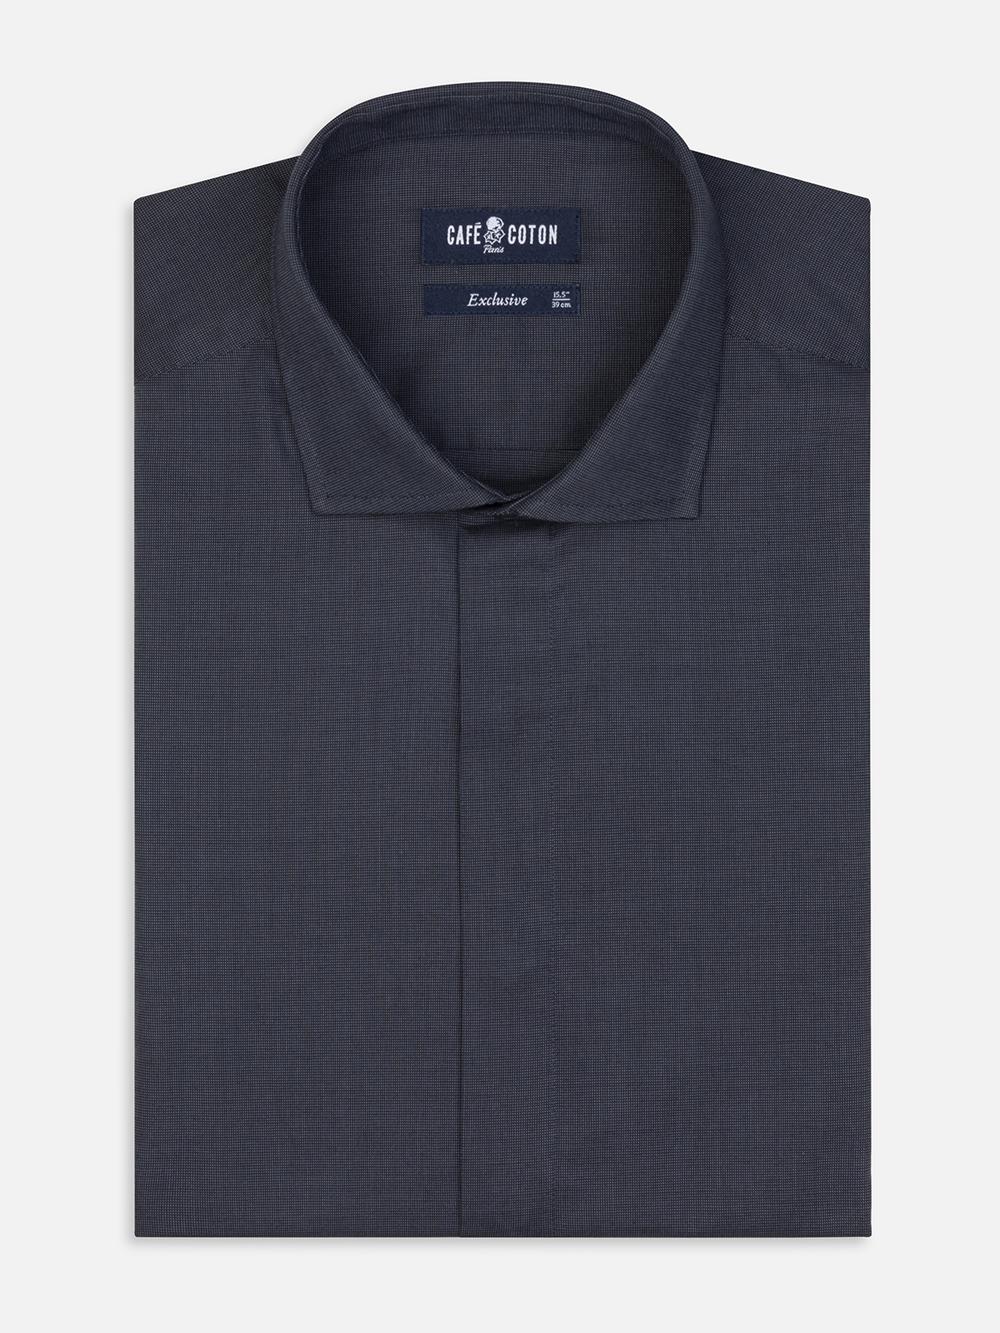 Bob-Tailliertes Hemd aus anthrazitfarbenem Mikro-Oxford - Verdeckte Knopfleiste